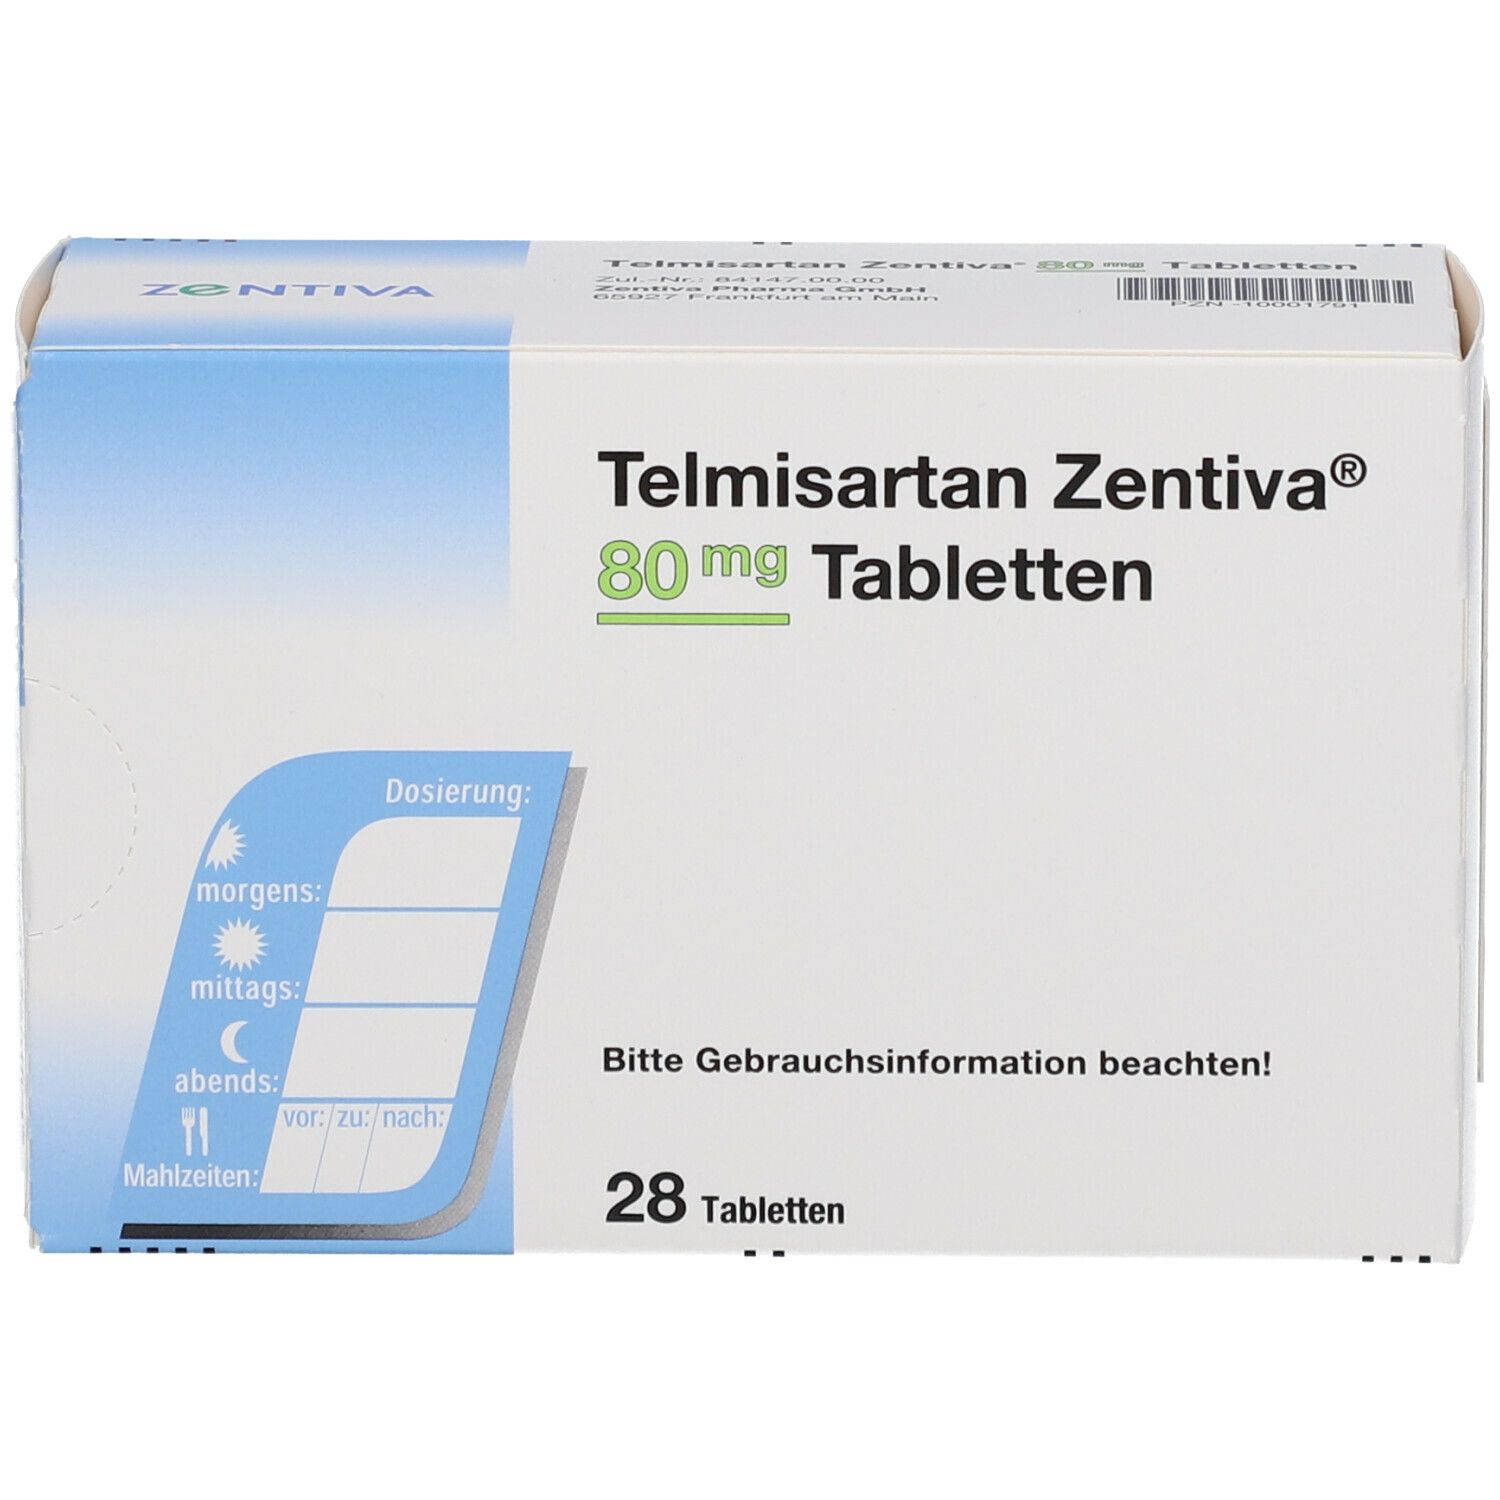 Telmisartan Zentiva® 80 mg